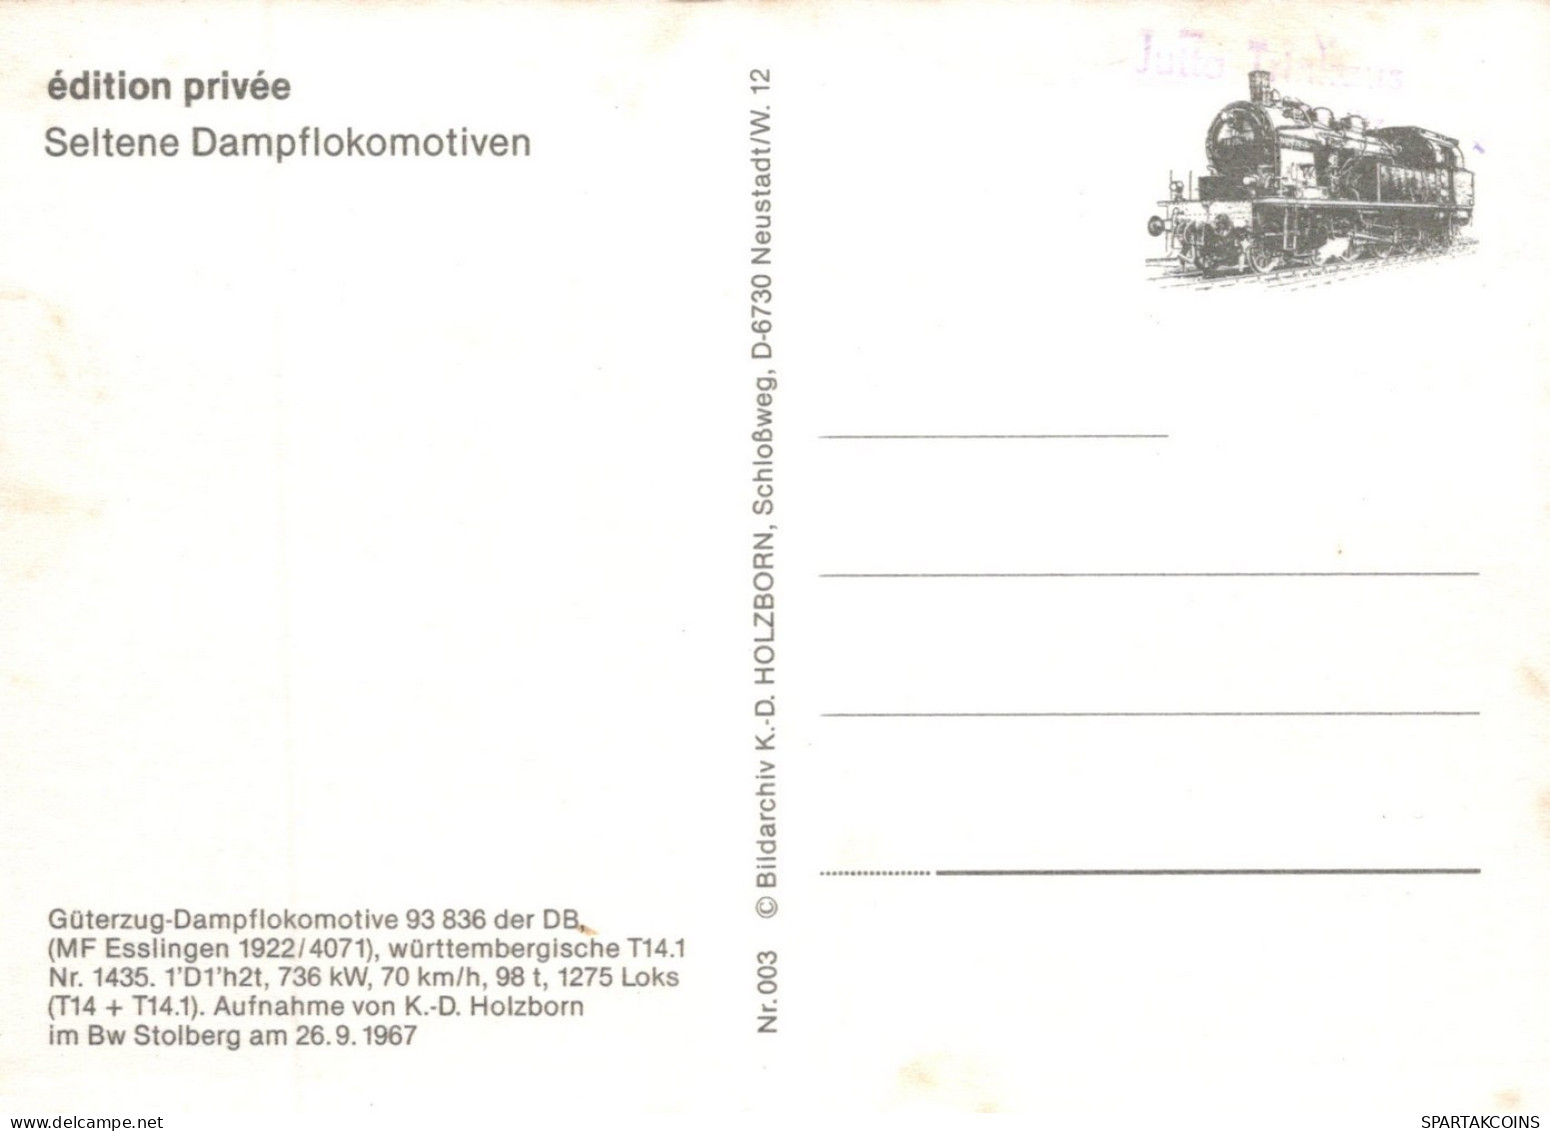 TREN TRANSPORTE Ferroviario Vintage Tarjeta Postal CPSM #PAA949.A - Eisenbahnen